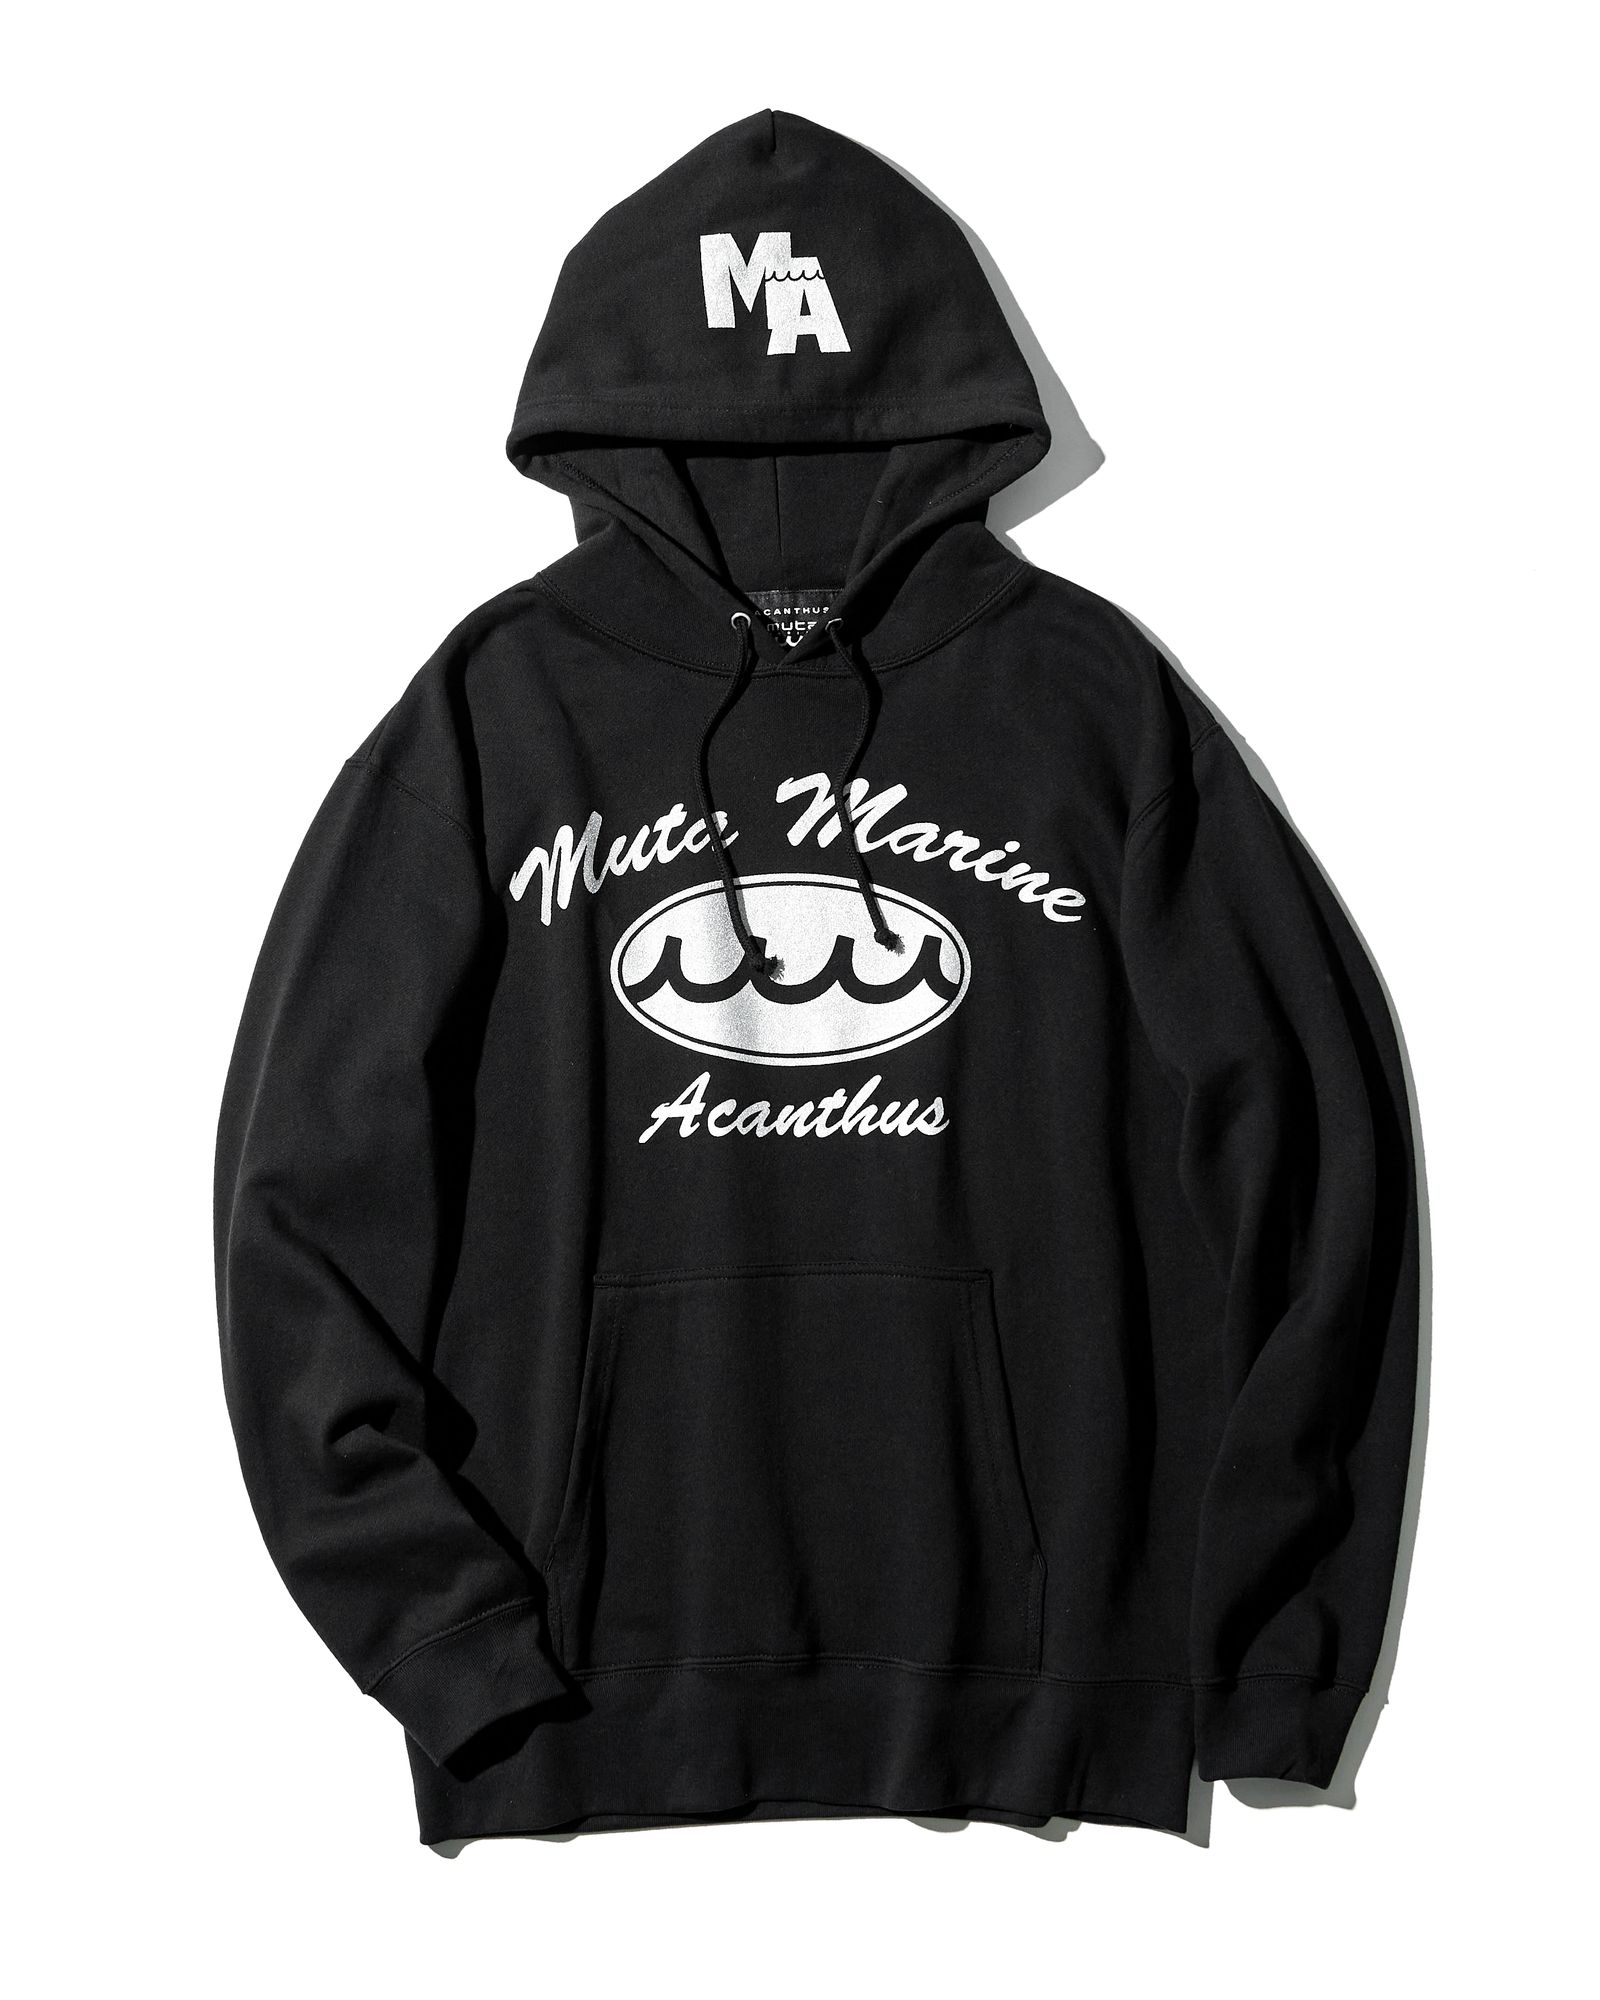 ACANTHUS x muta MARINE / muta Script Logo Hooded Sweatshirts / プルオーバーパーカー /  BLACK / MA2409 - S